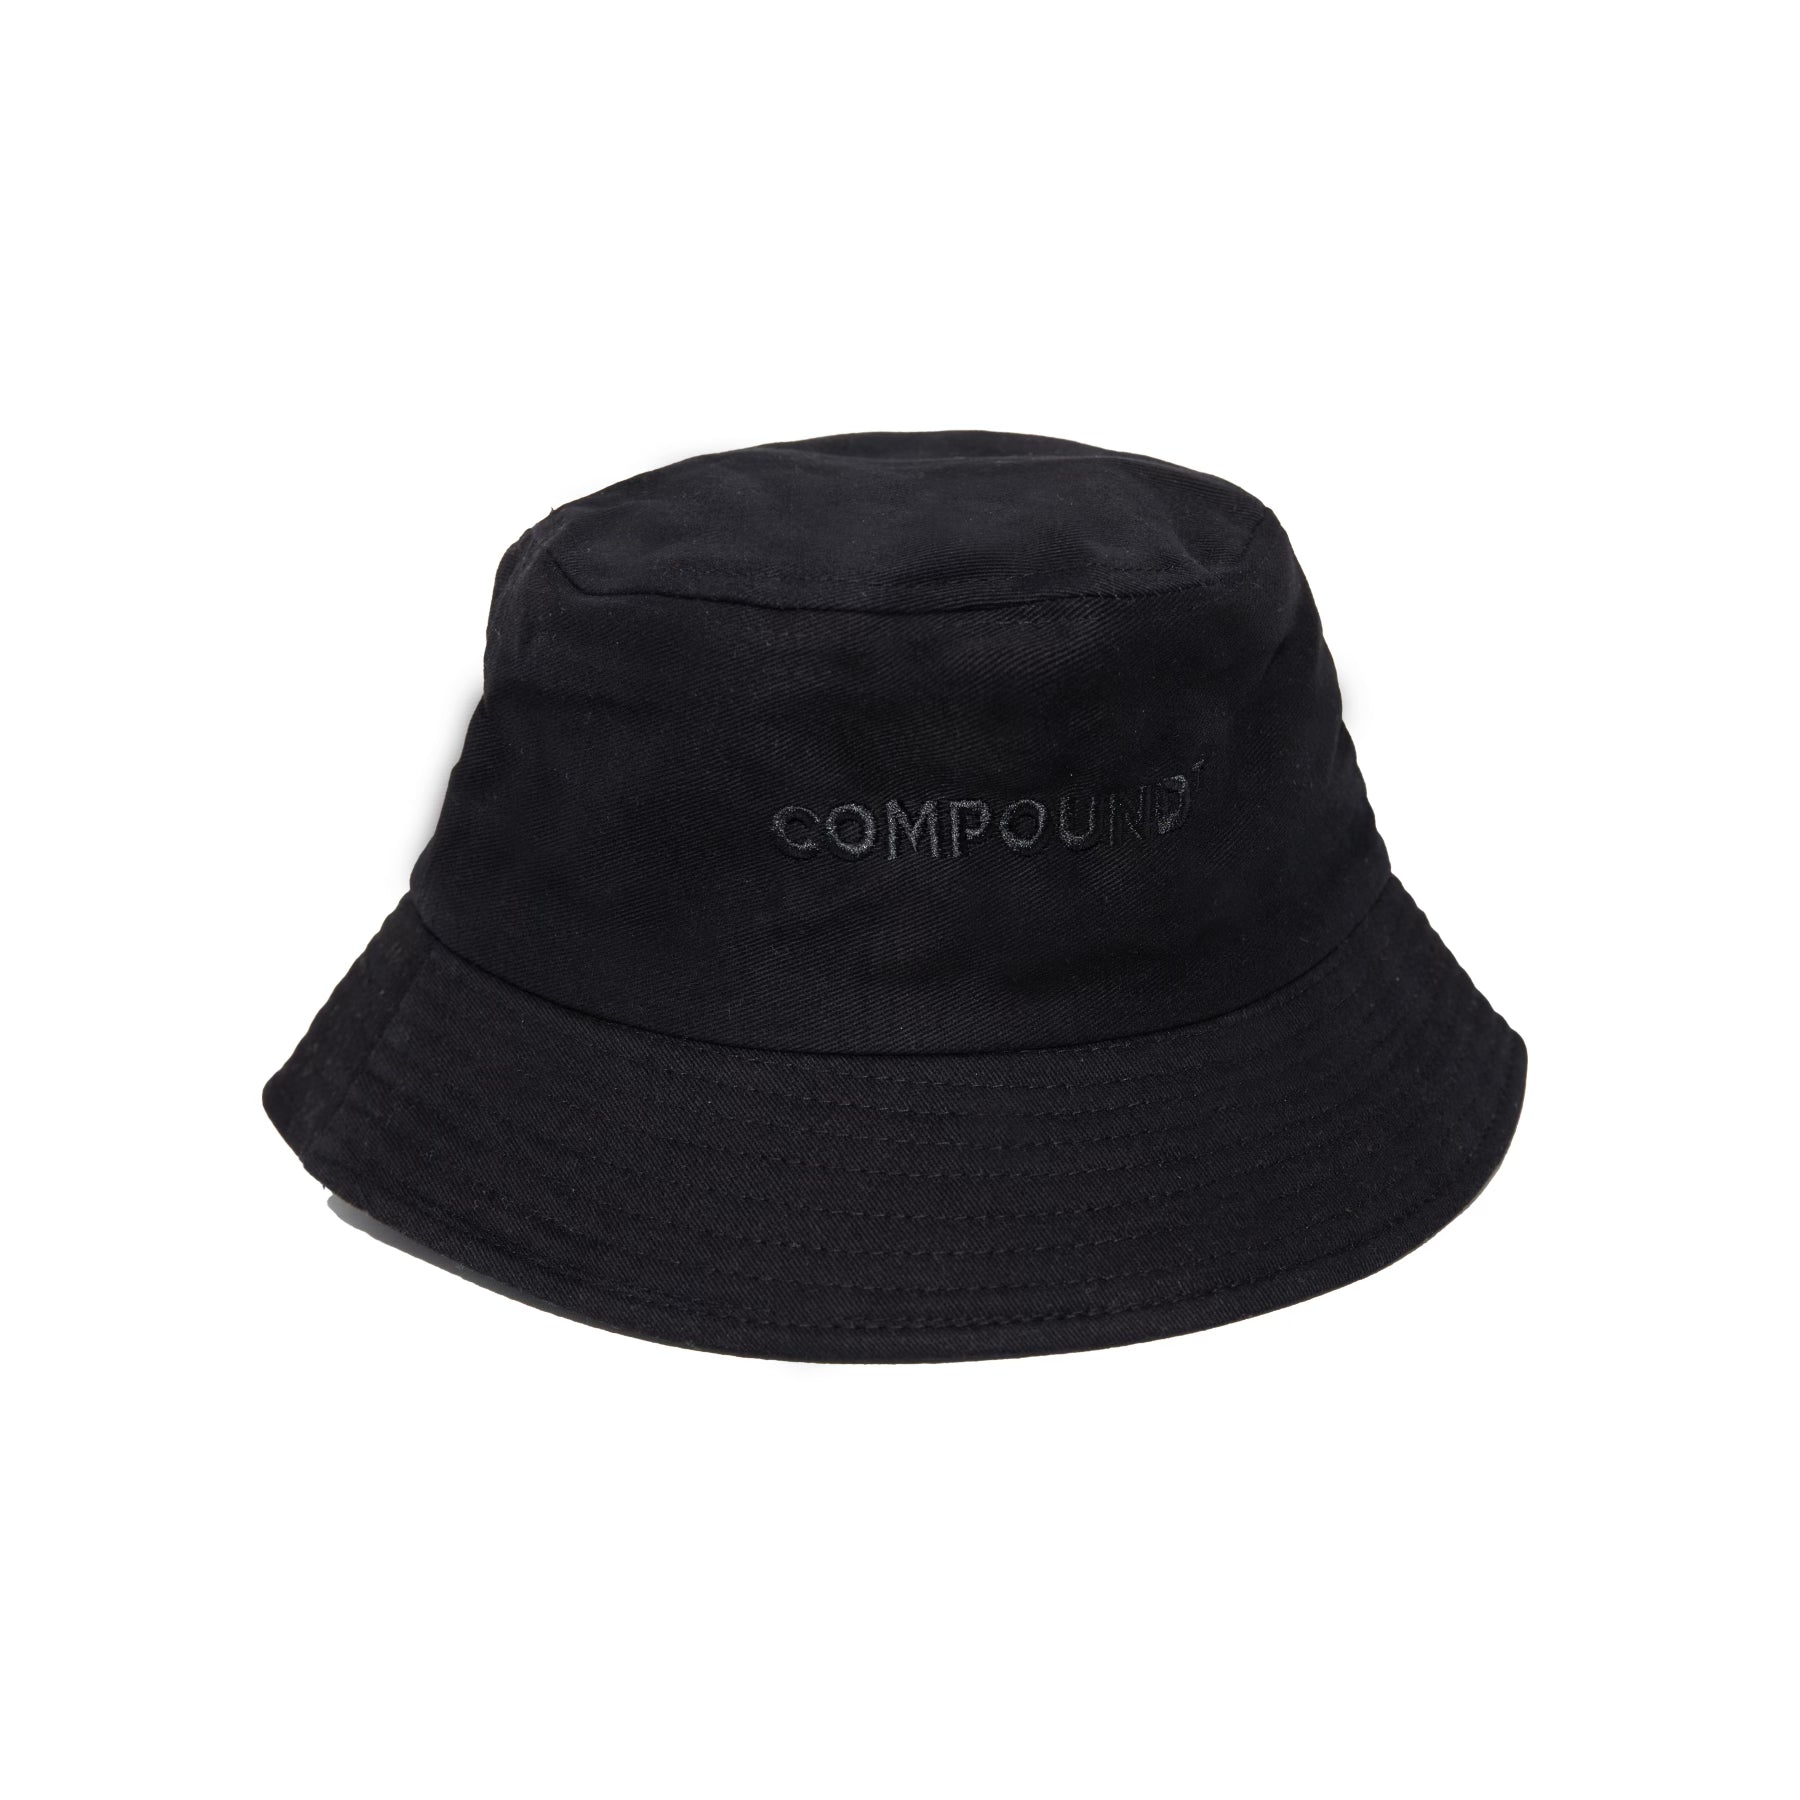 BLACK ON BLACK COMPOUND 7 BUCKET HAT